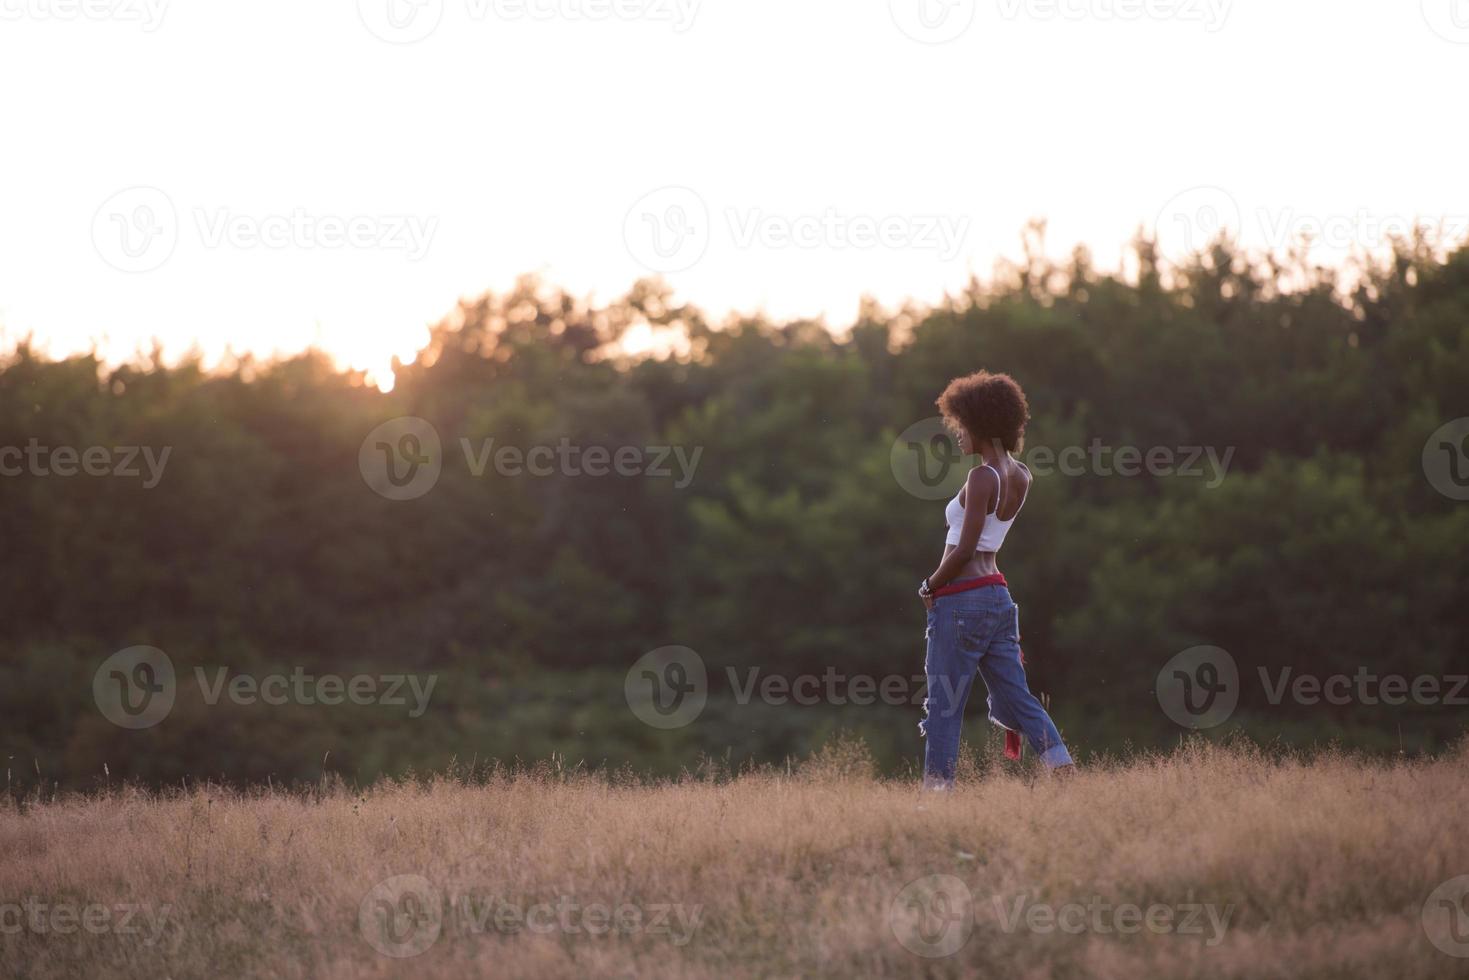 junge schwarze Frau in der Natur foto